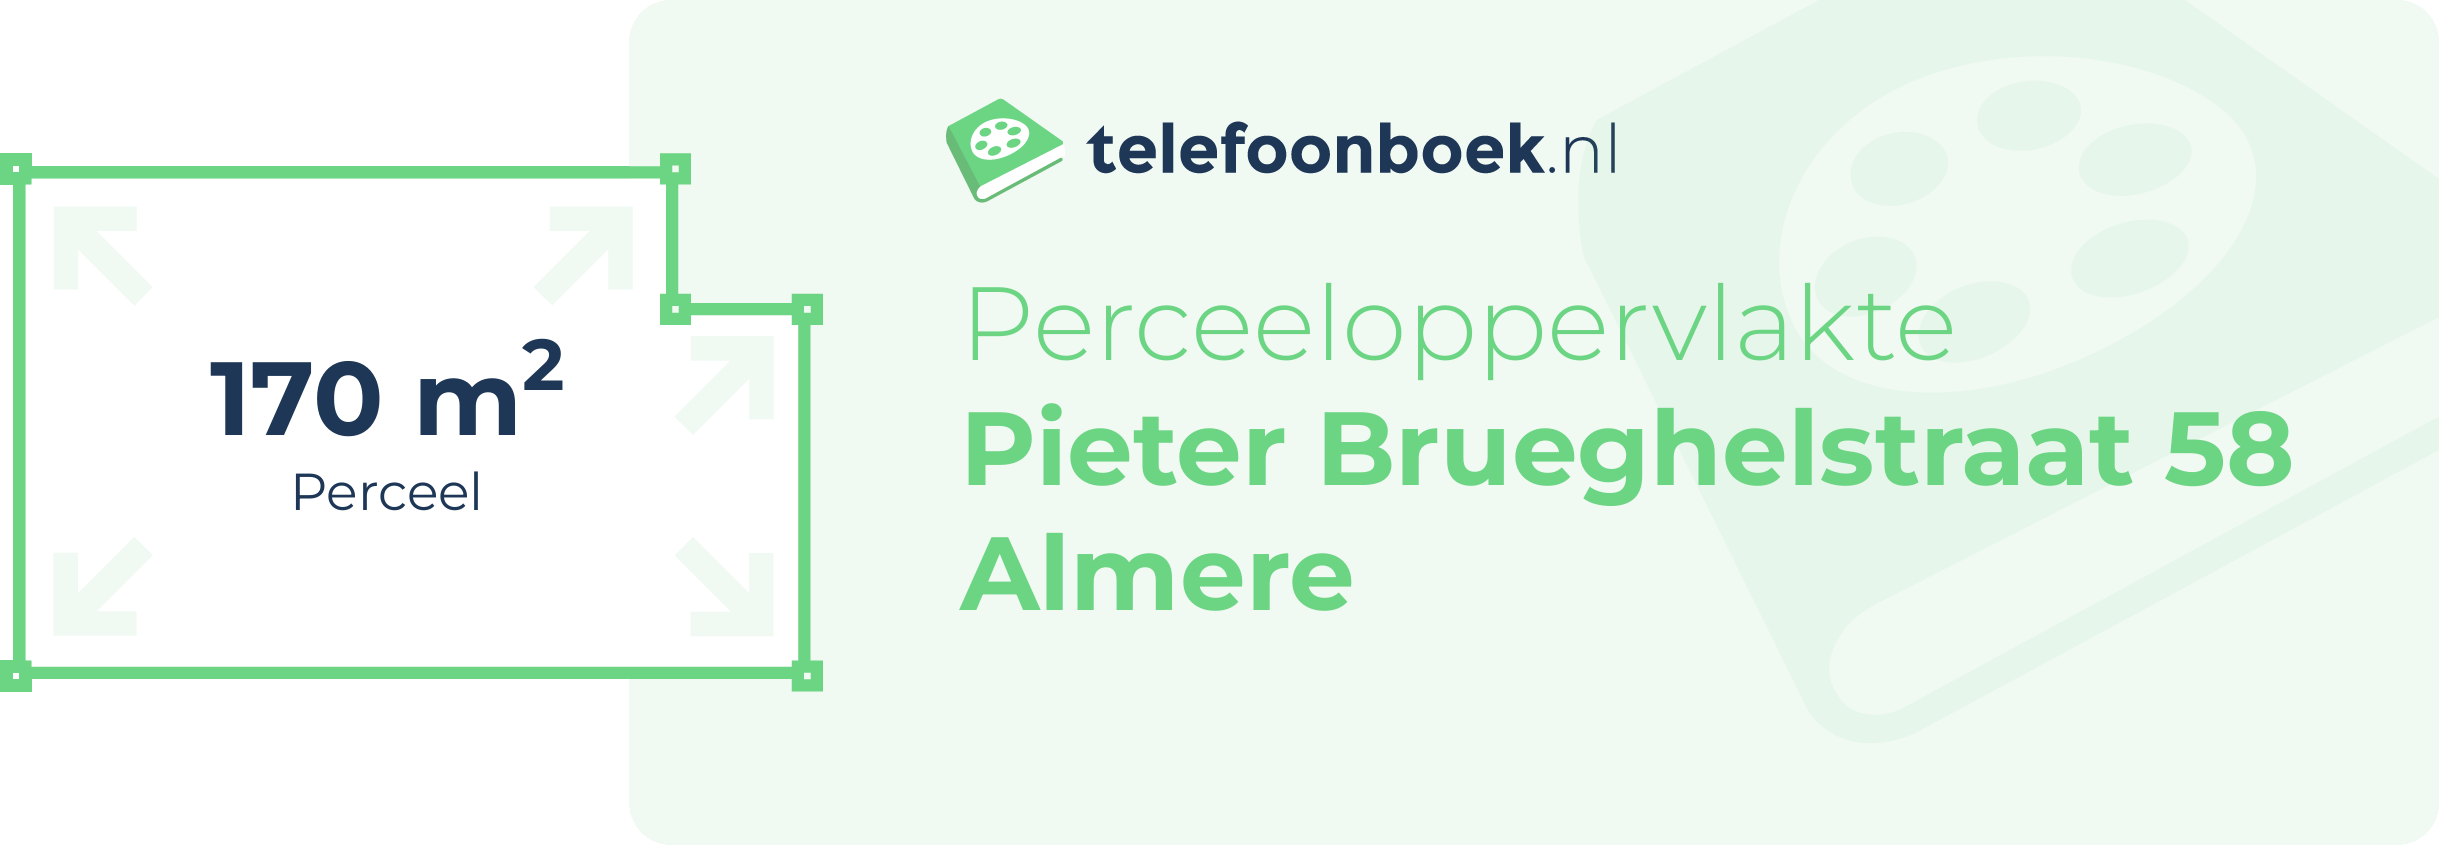 Perceeloppervlakte Pieter Brueghelstraat 58 Almere